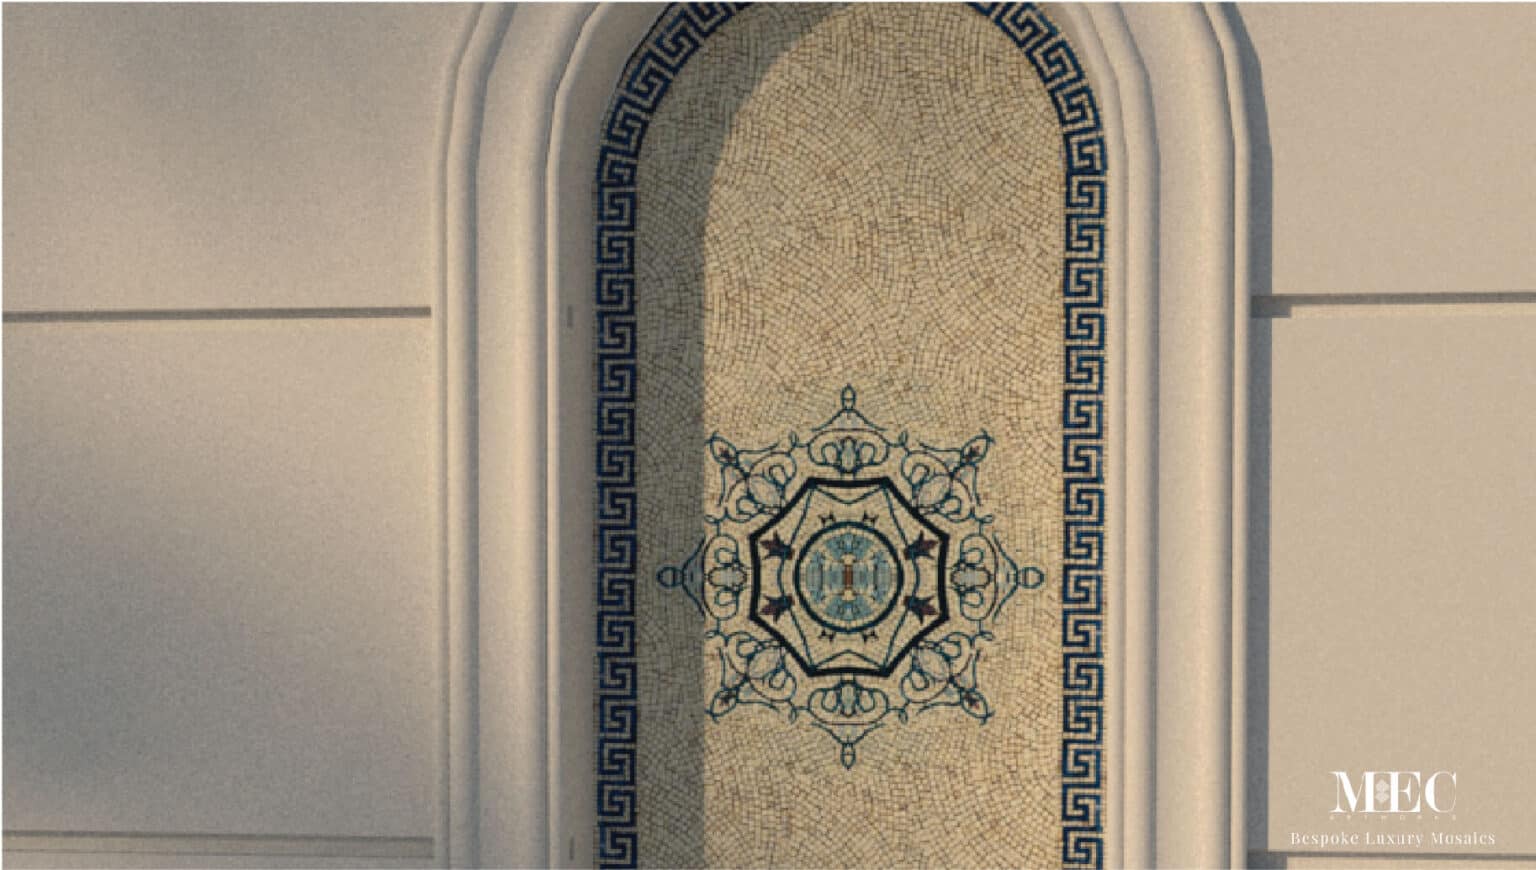 crema-marfil-handcut-marble mosaic tile artwork niche front elevation